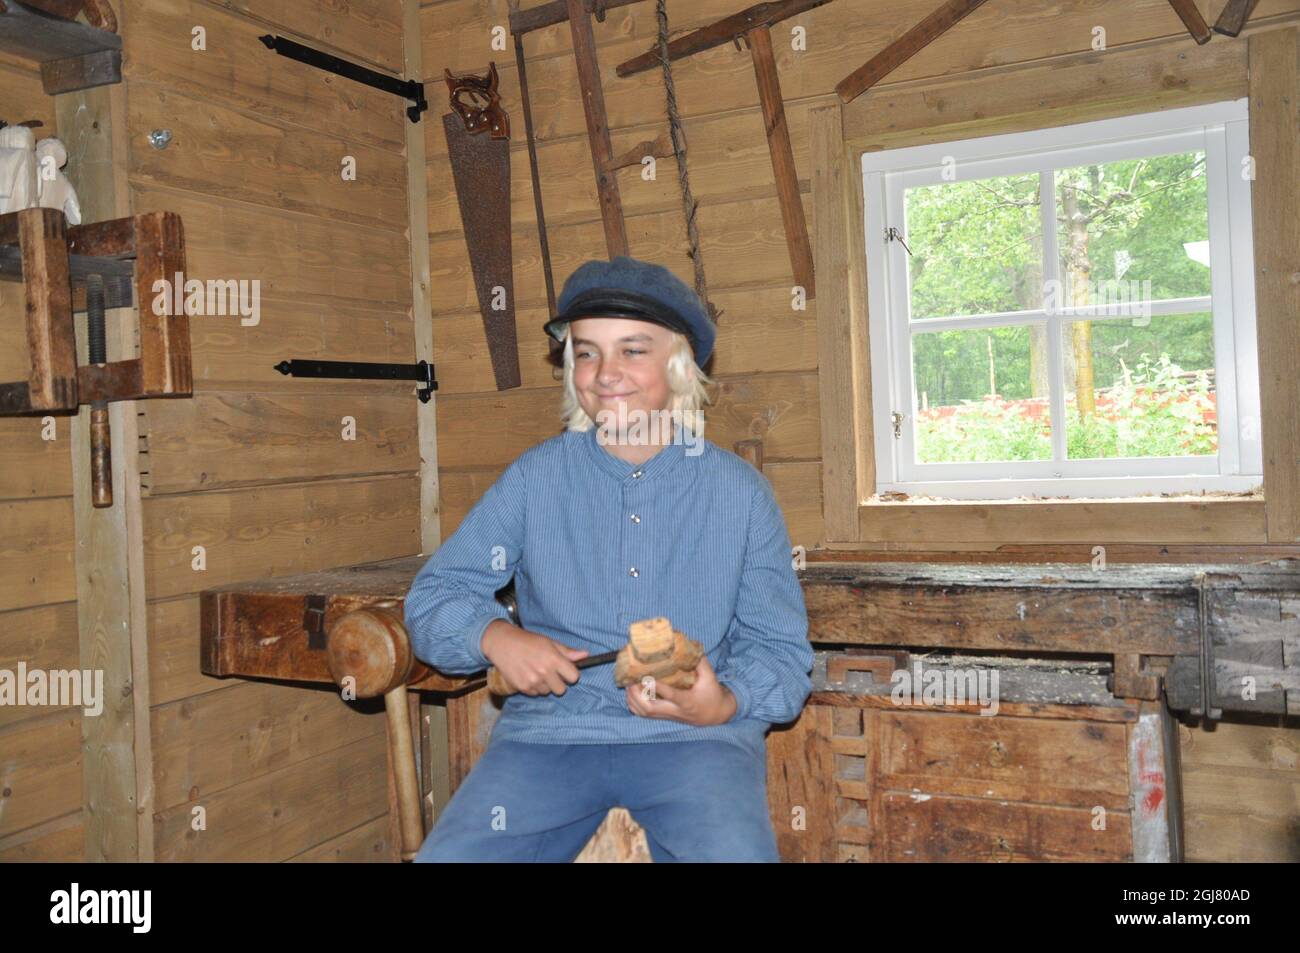 VIMMERBY 20130613 il nuovo Katthult (casa di Emil in LÃ¶nnebergas) al mondo di Astrid Lindgren a Vimmerby ha aperto oggi 13 giugno 2013. Emil nel bosco. Foto: Janne StrÃ¶msten / SCANPIX kod 75598 *** BETALBILD *** Foto Stock